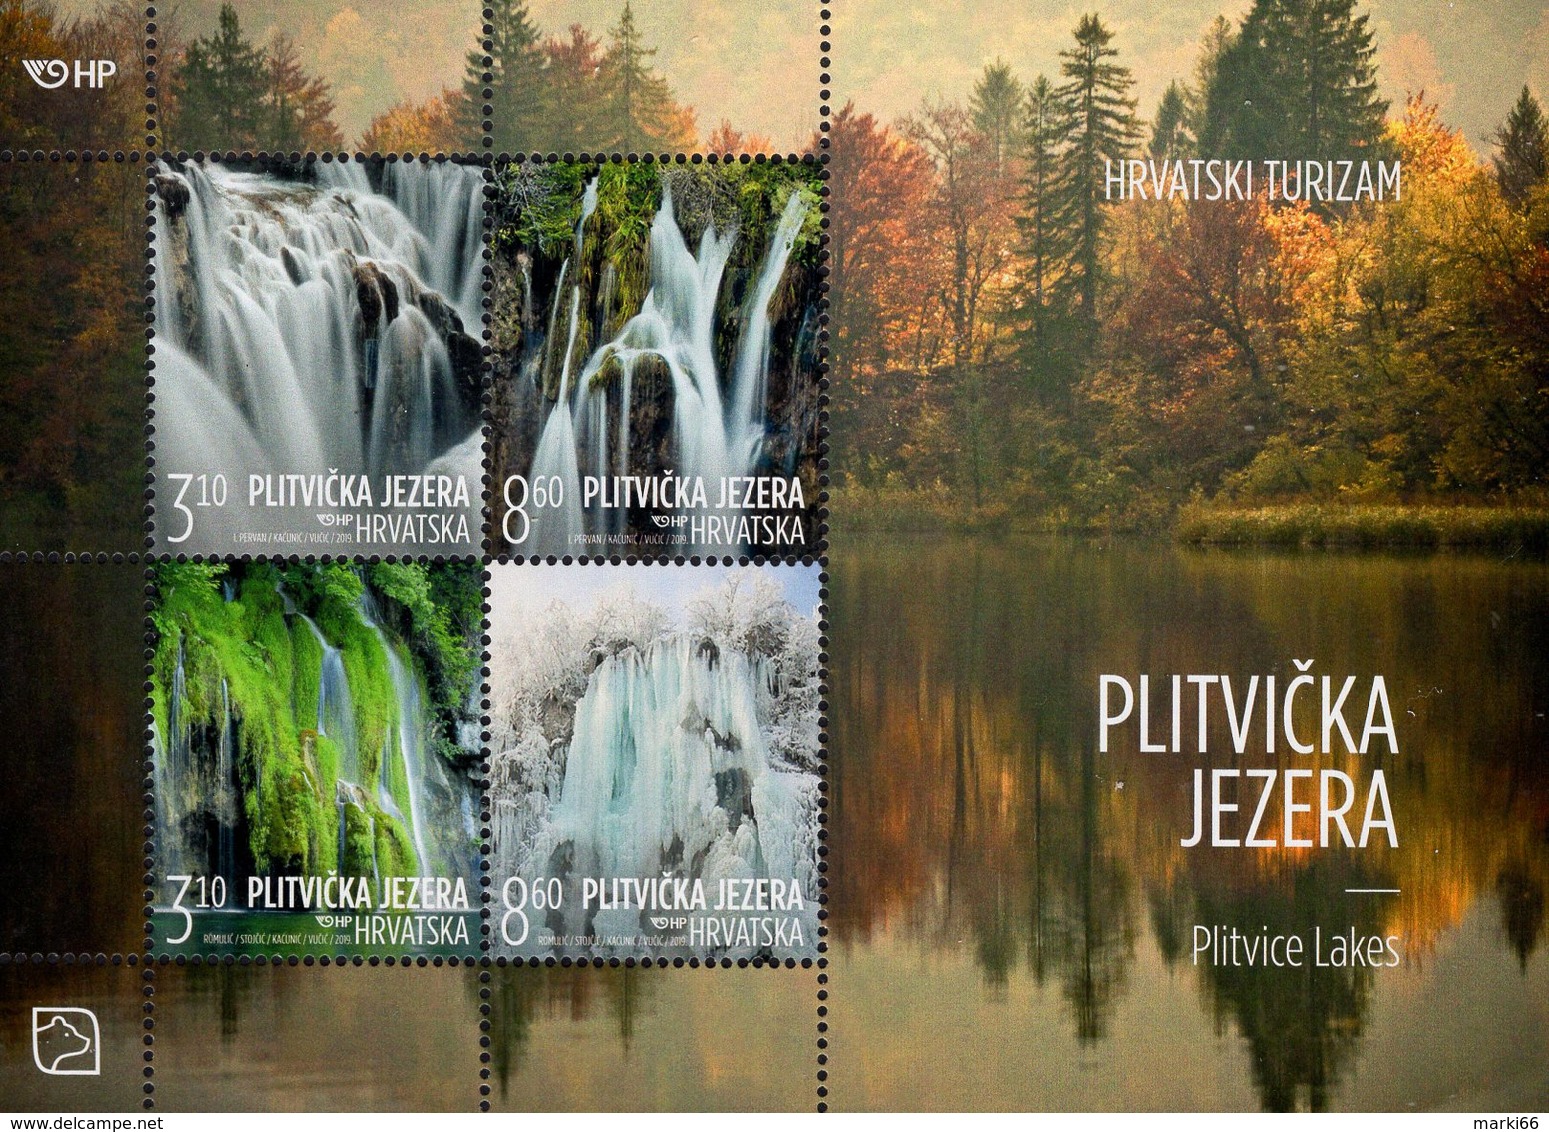 Croatia - 2019 - Tourism - Plitvice Lakes - Mint Souvenir Sheet - Croazia